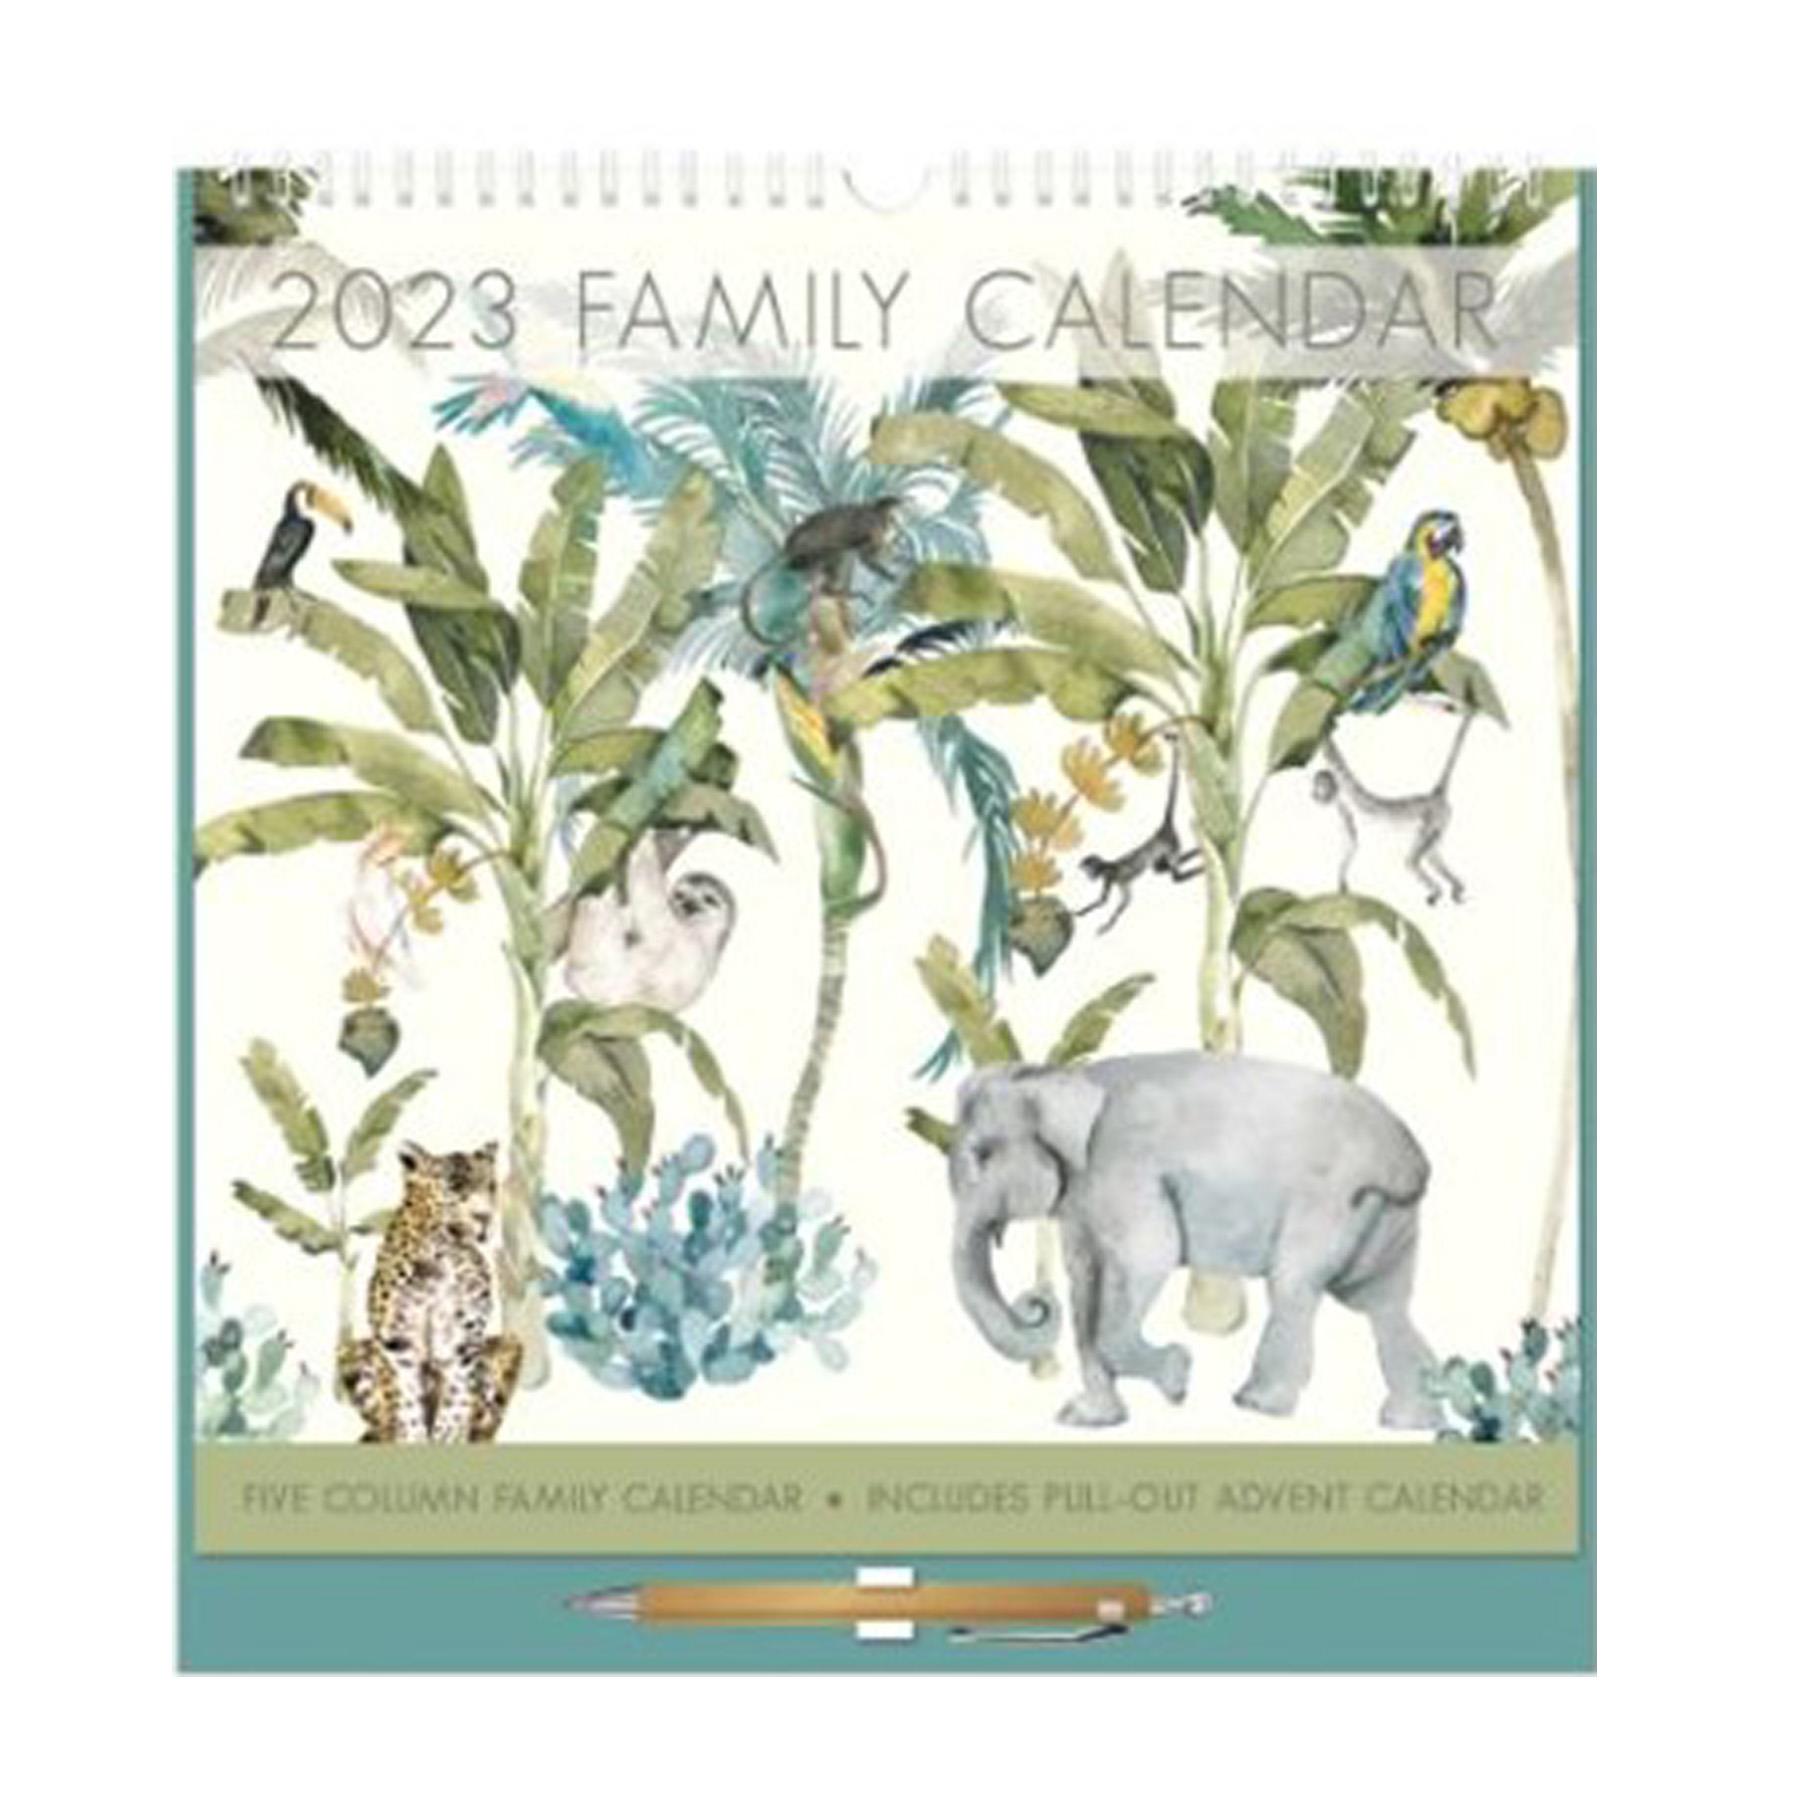 2023 Family 5 Column Calendar with Free Advent Calendar - Animal Design